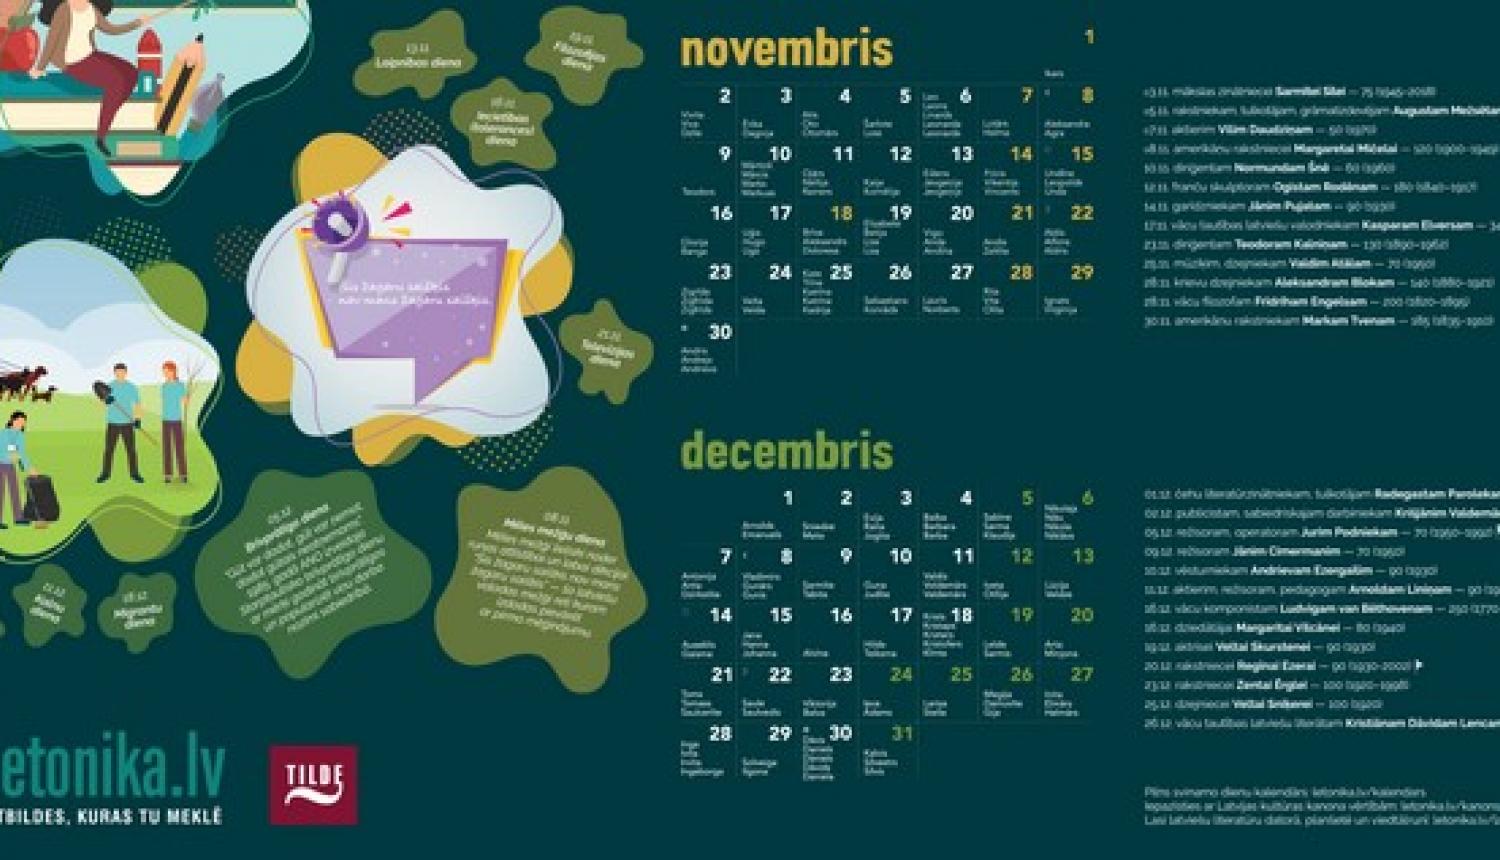 Letonika.lv kalendārs - novembris un decembris